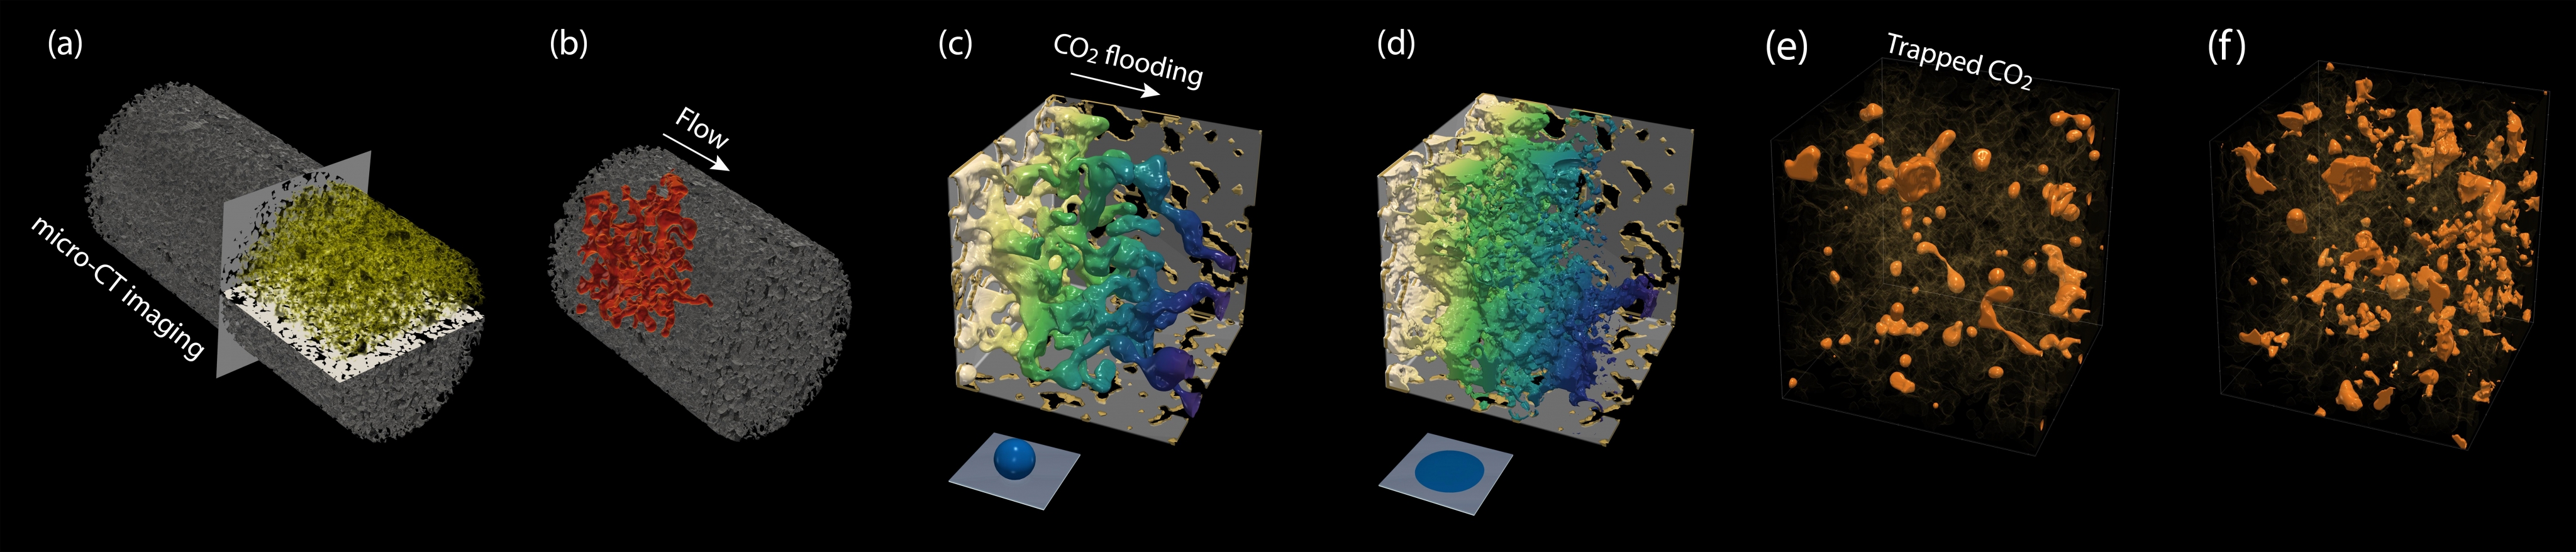 Carbon capture and storage flow modeling